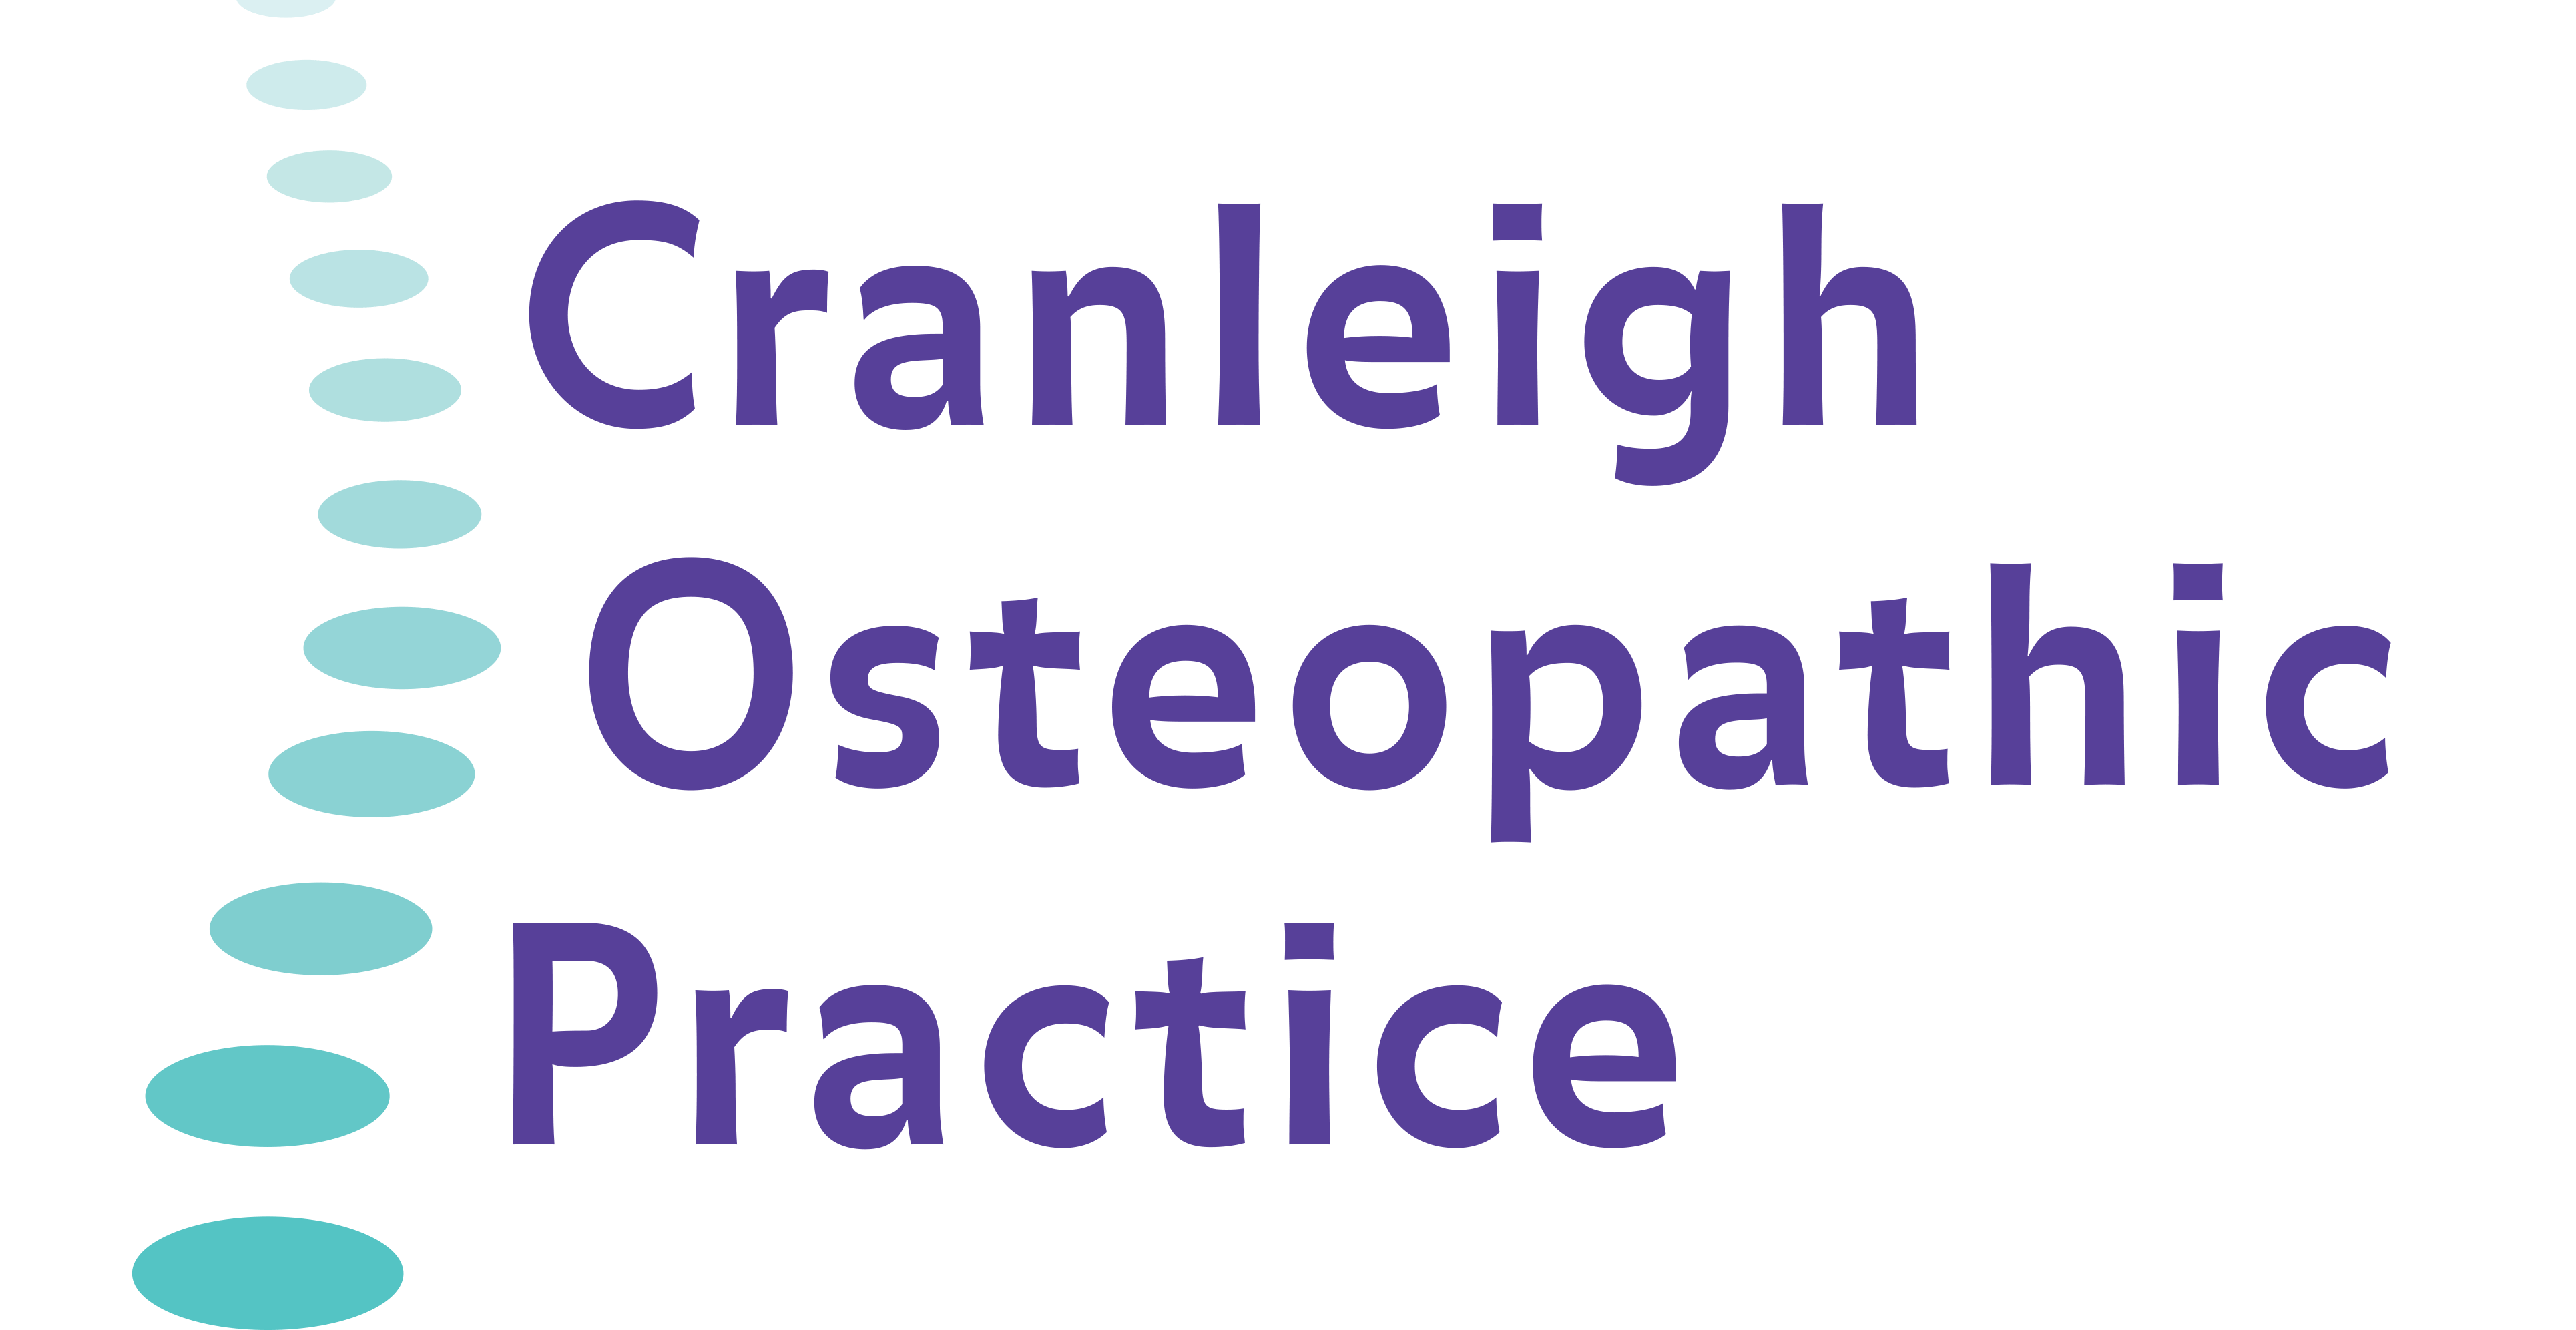 Cranleigh Osteopathic Practice